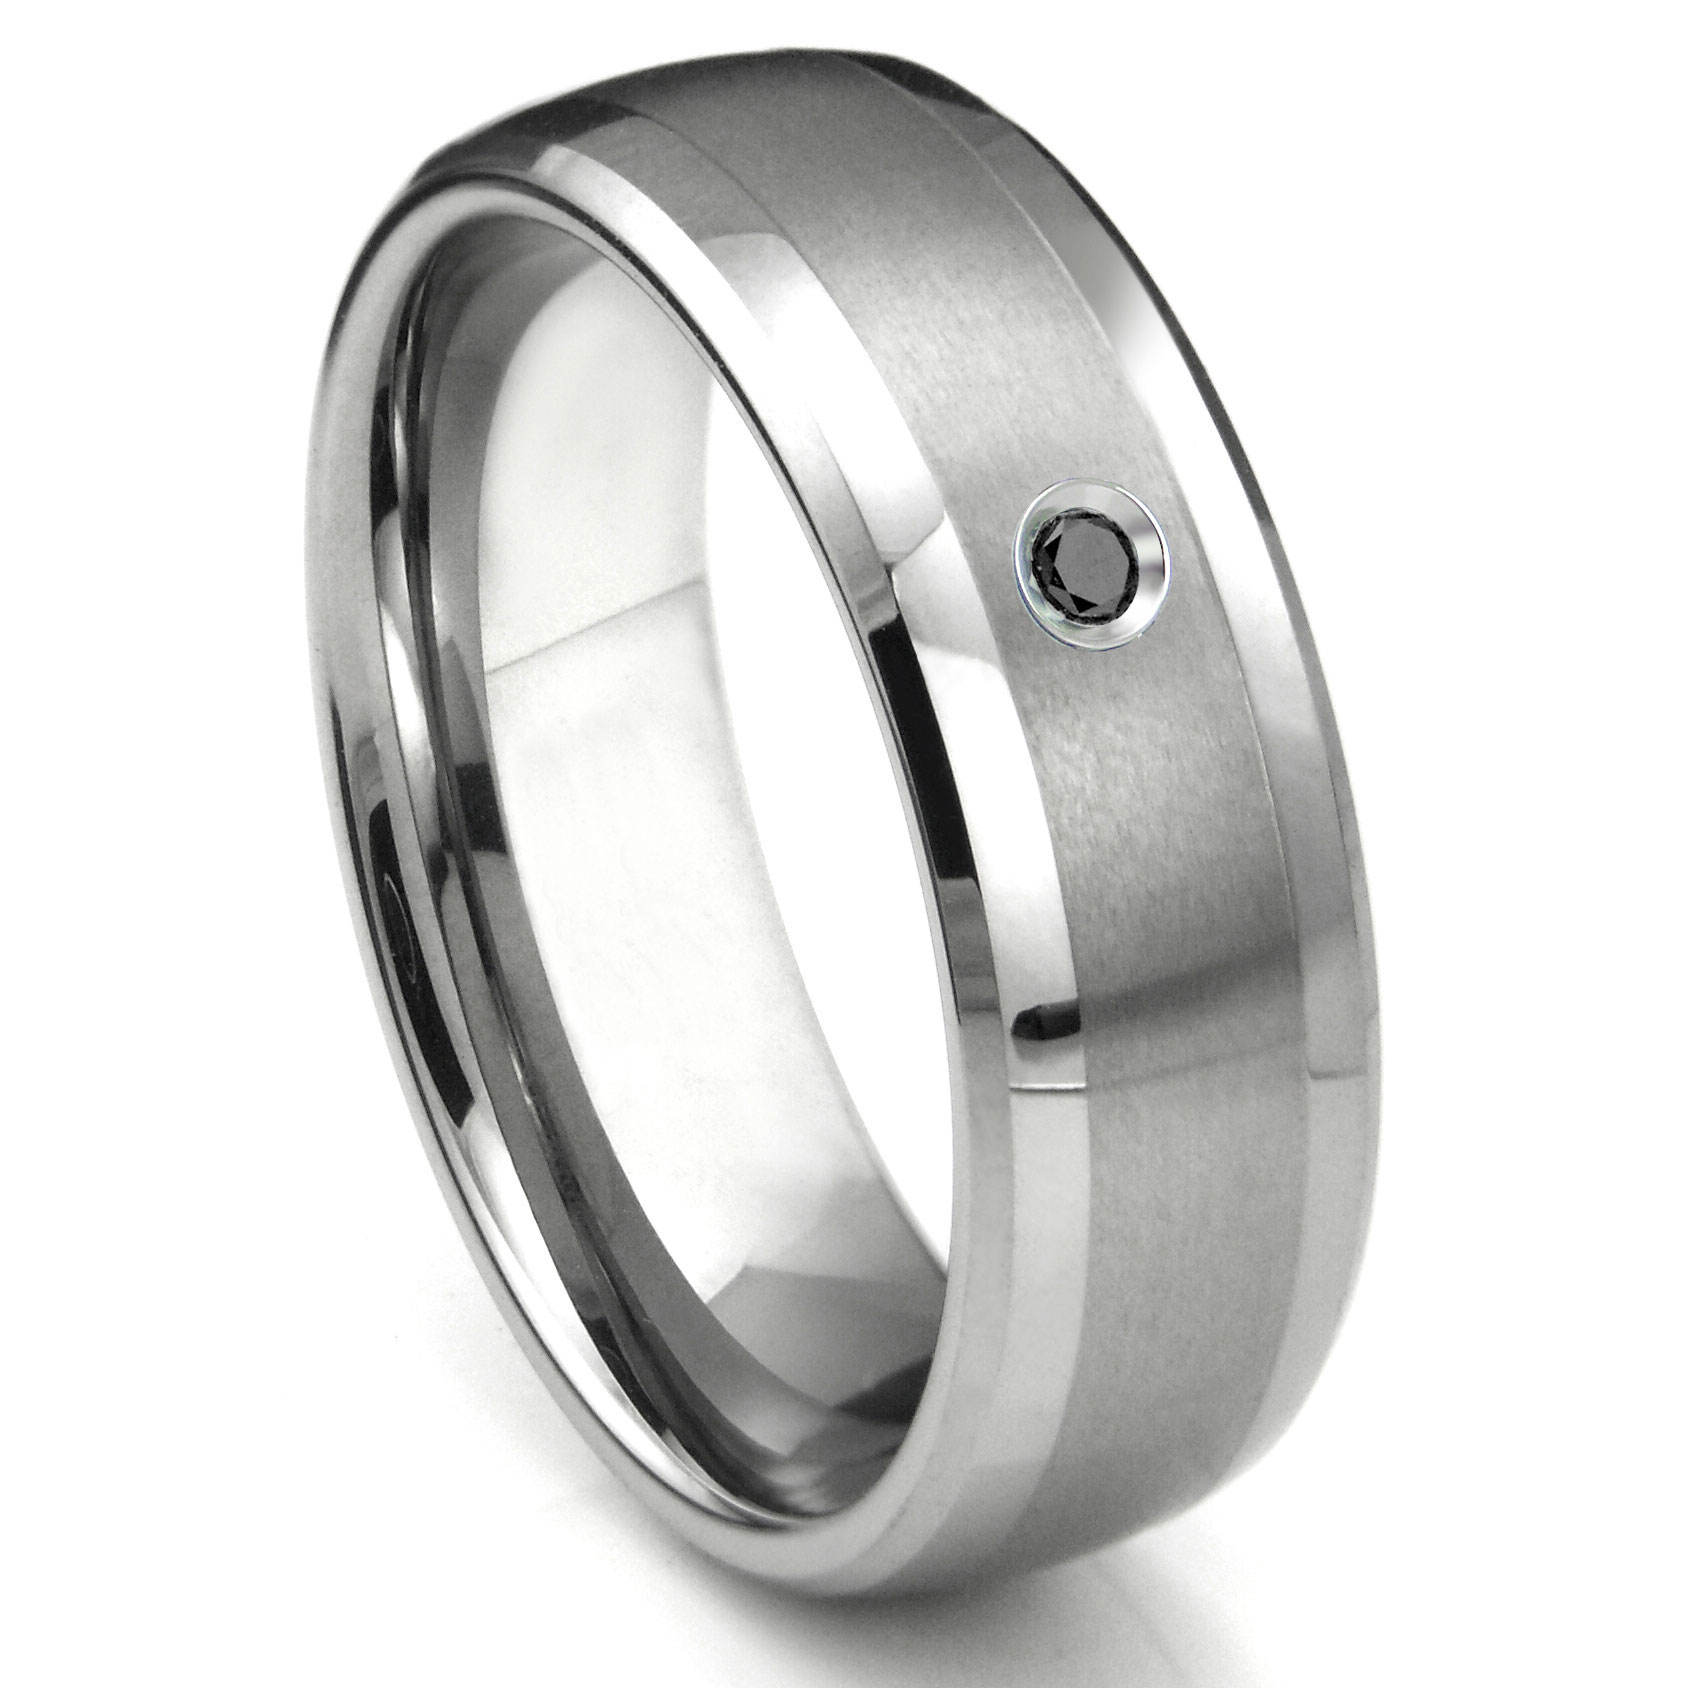 Epinki Mens Ceramic Ring Polished Brushed Matte Beveled Edge Band Black Wedding Ring 